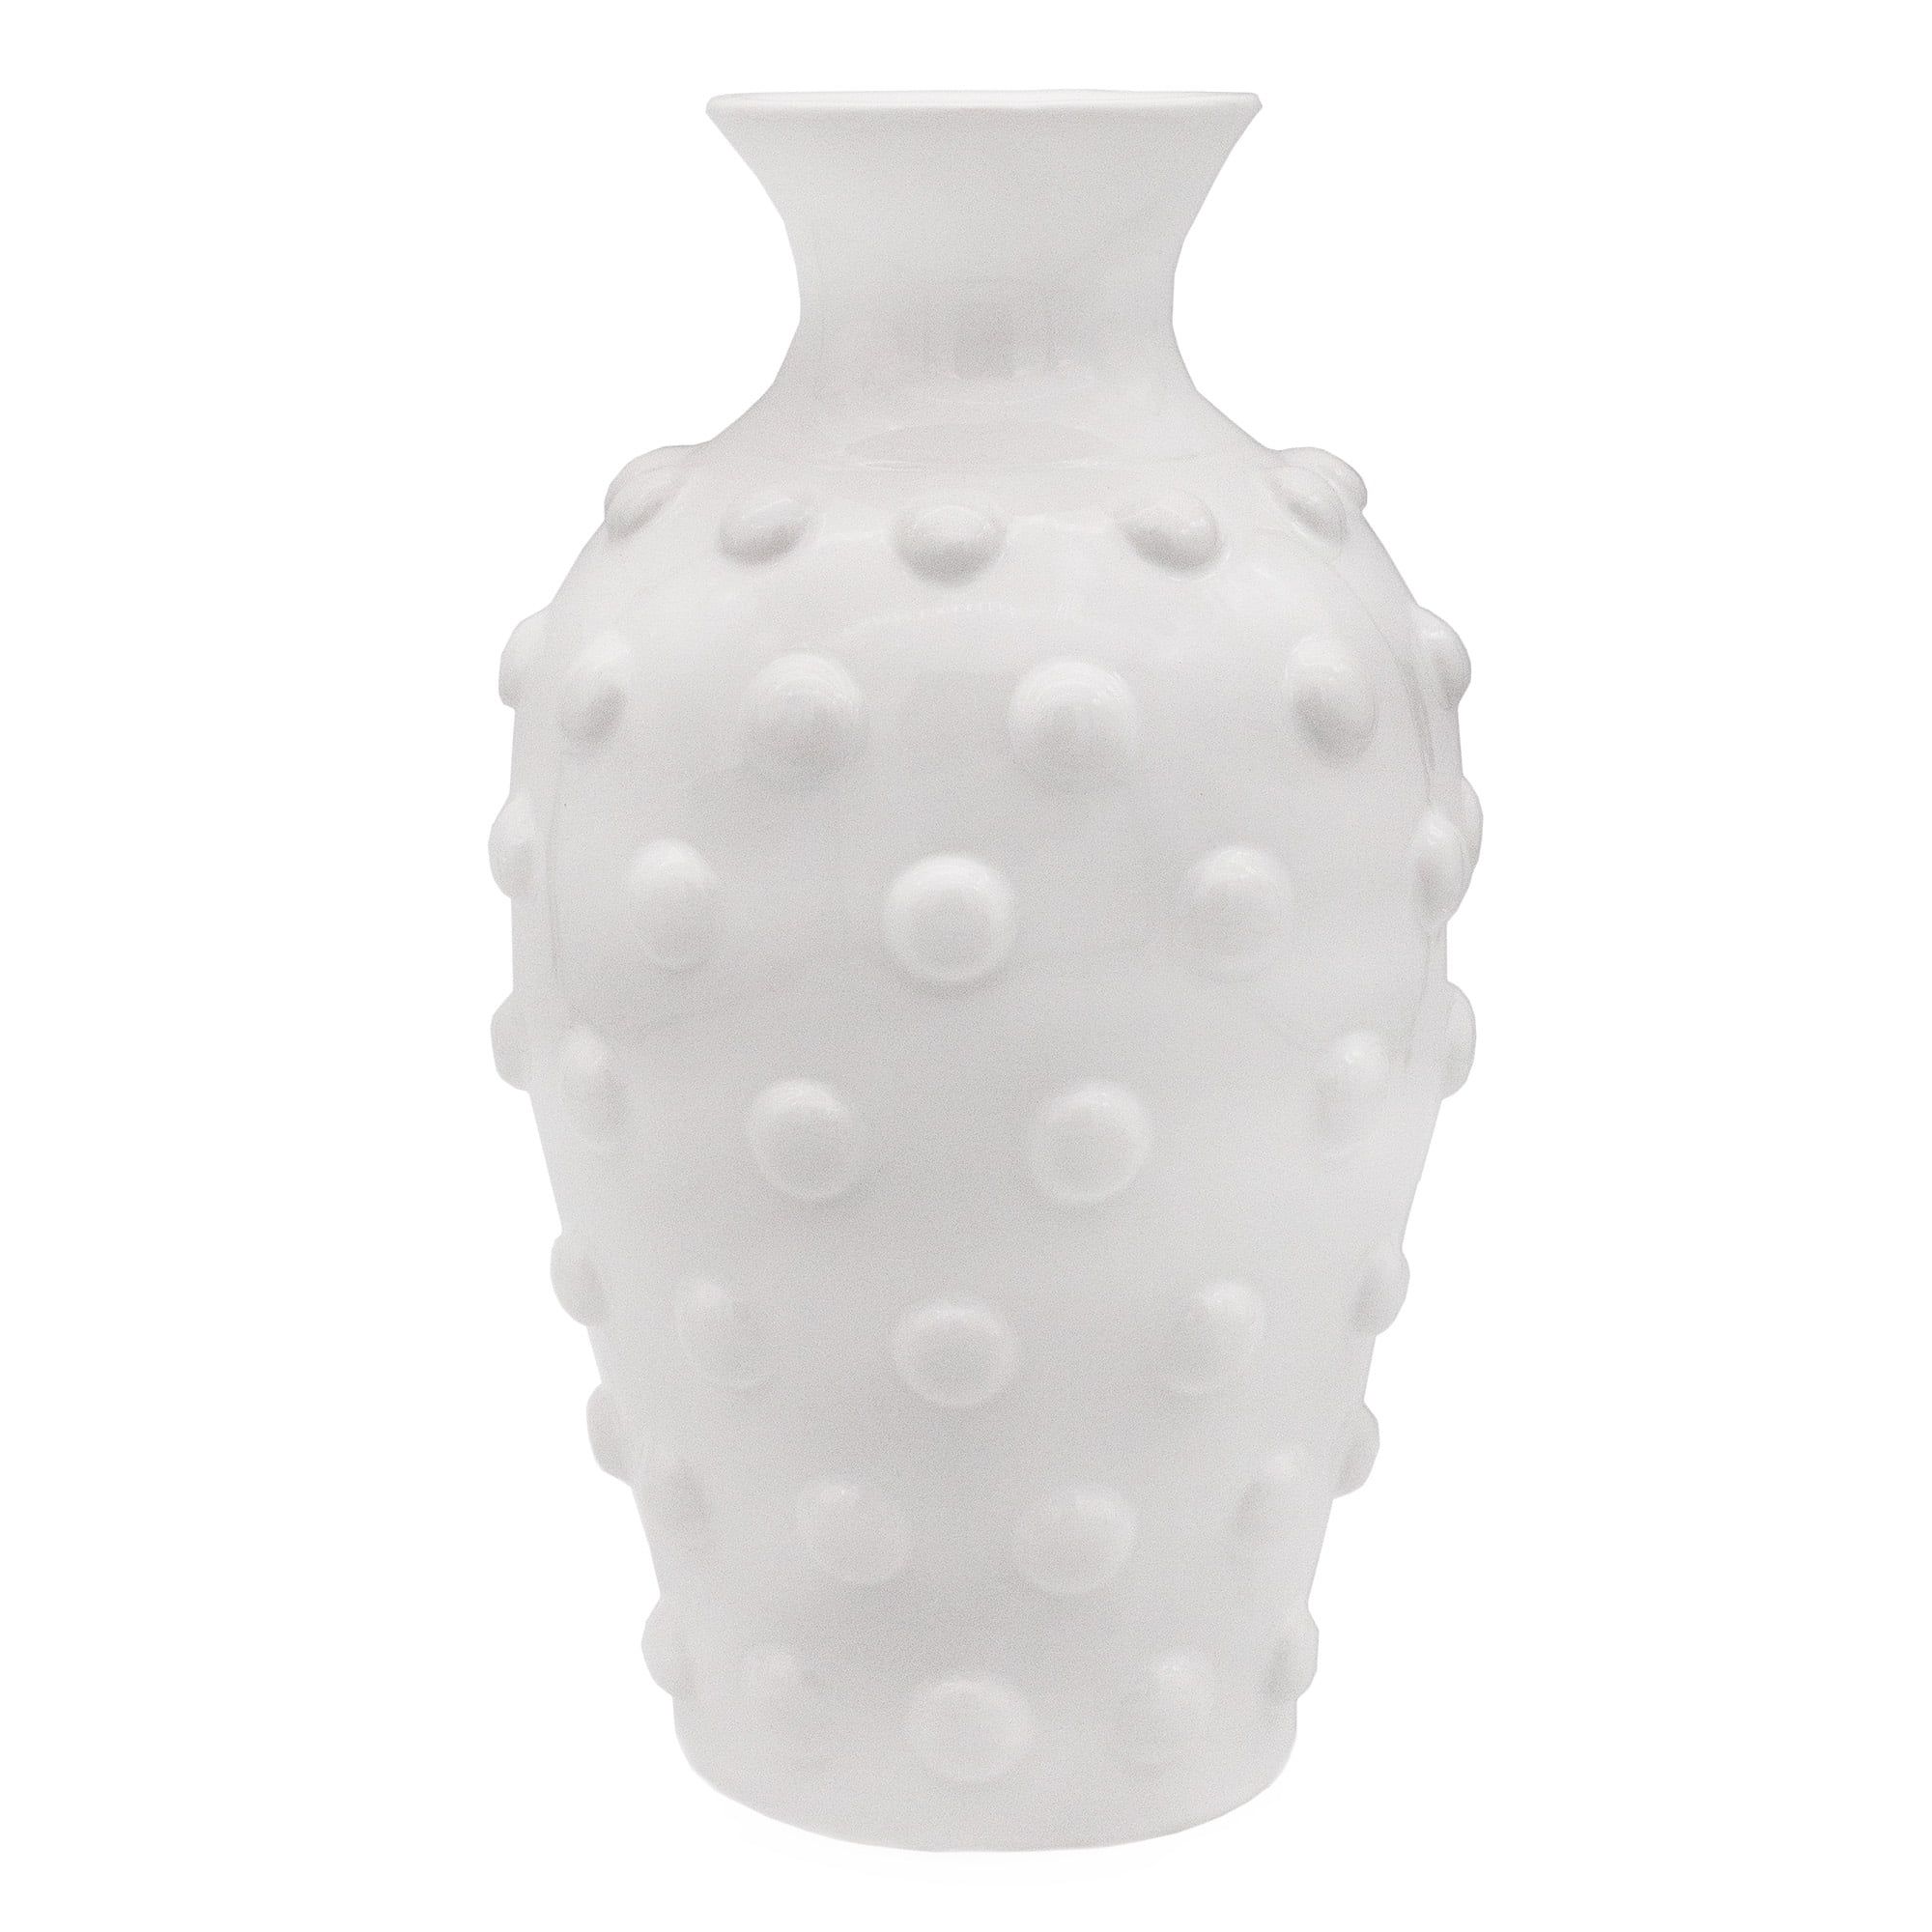 AuldHome Old-Fashioned White Hobnail Vase; Vintage Decor for Home, Office, Events | Walmart (US)